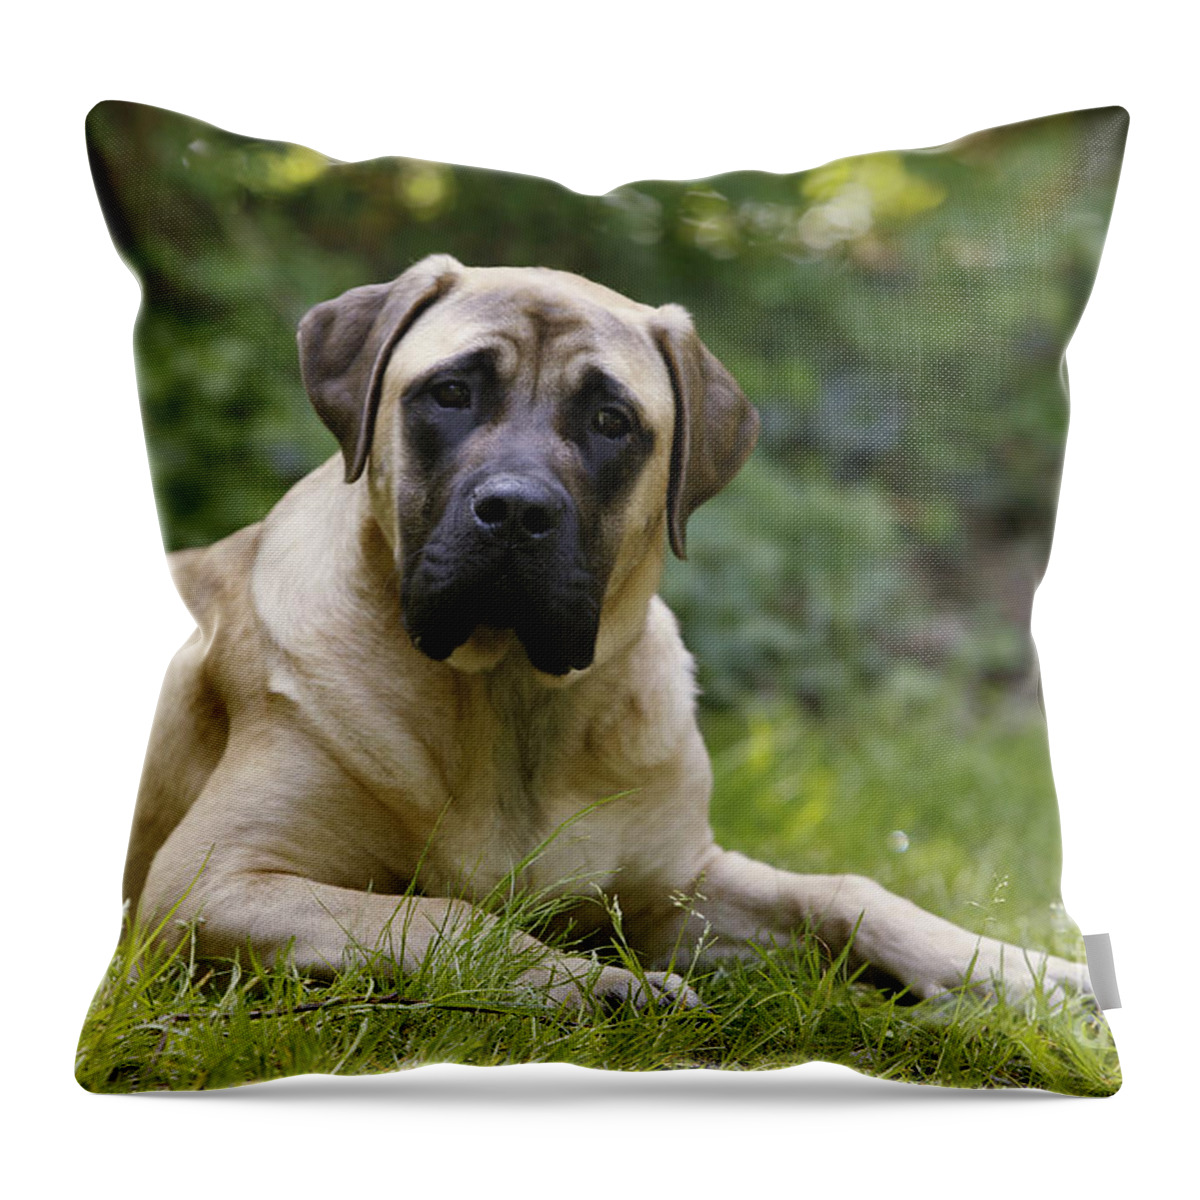 Bullmastiff Throw Pillow featuring the photograph Bullmastiff Dog by Jean-Michel Labat